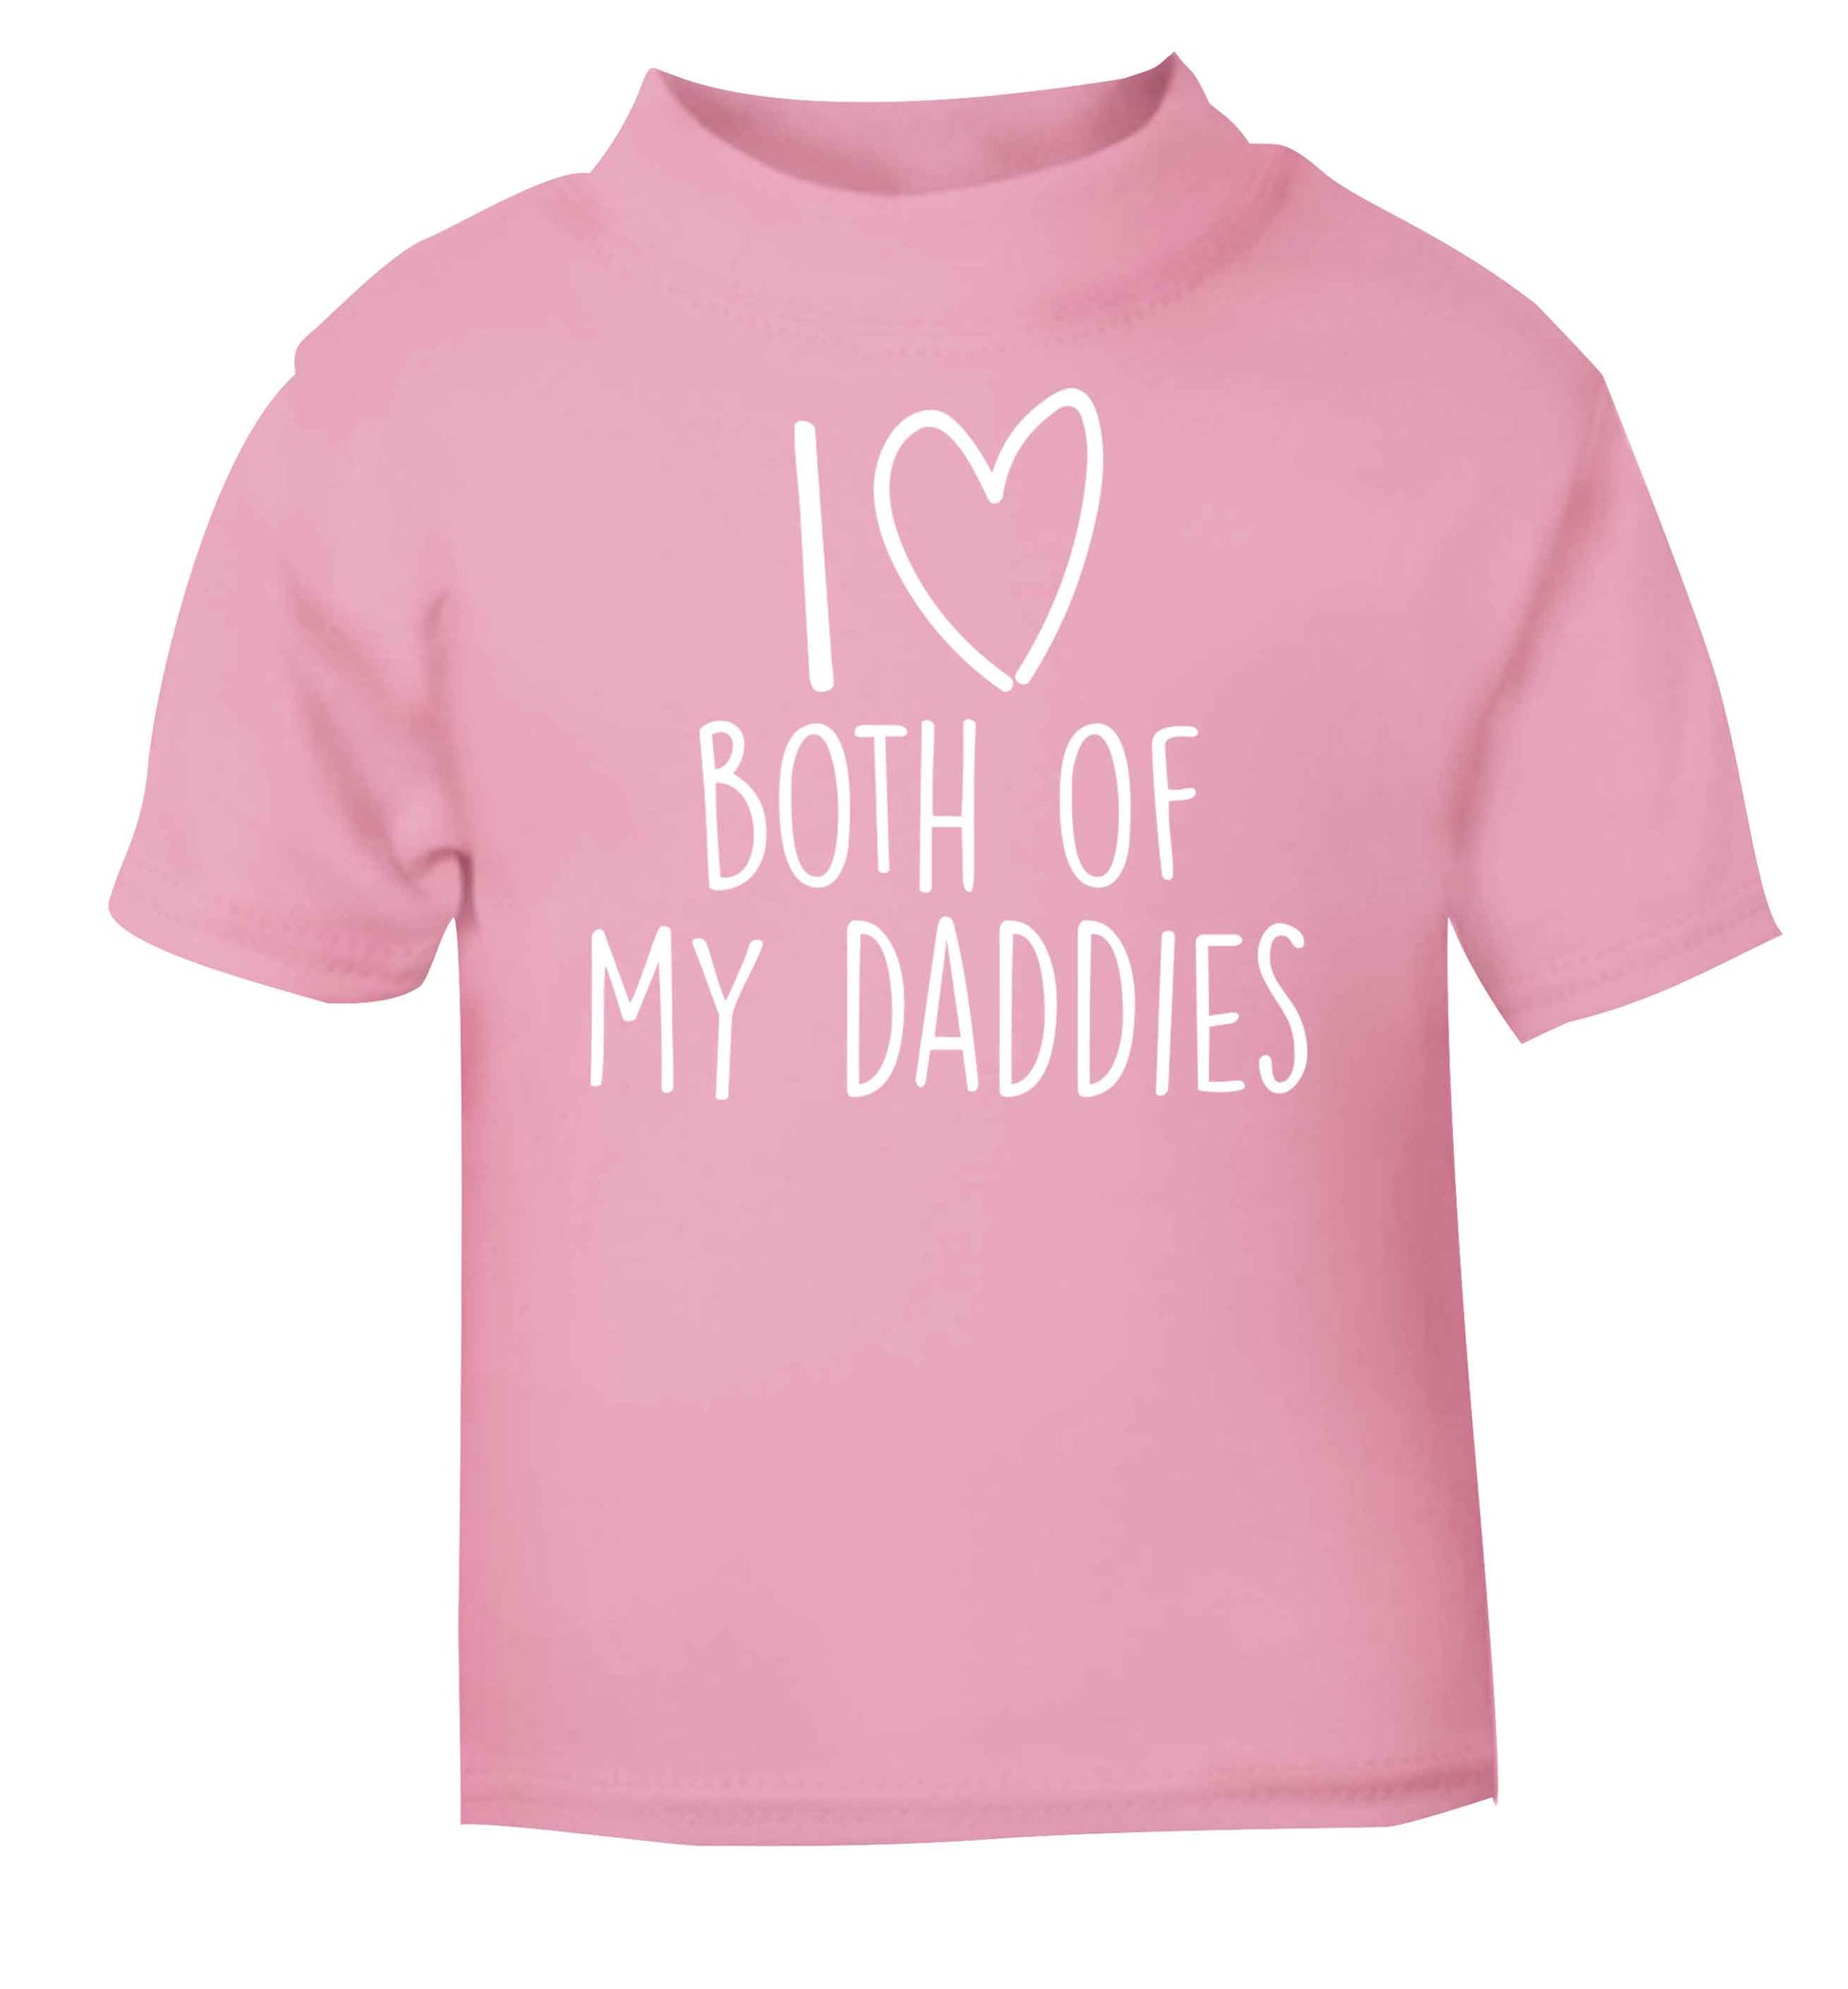 I love both of my daddies light pink baby toddler Tshirt 2 Years